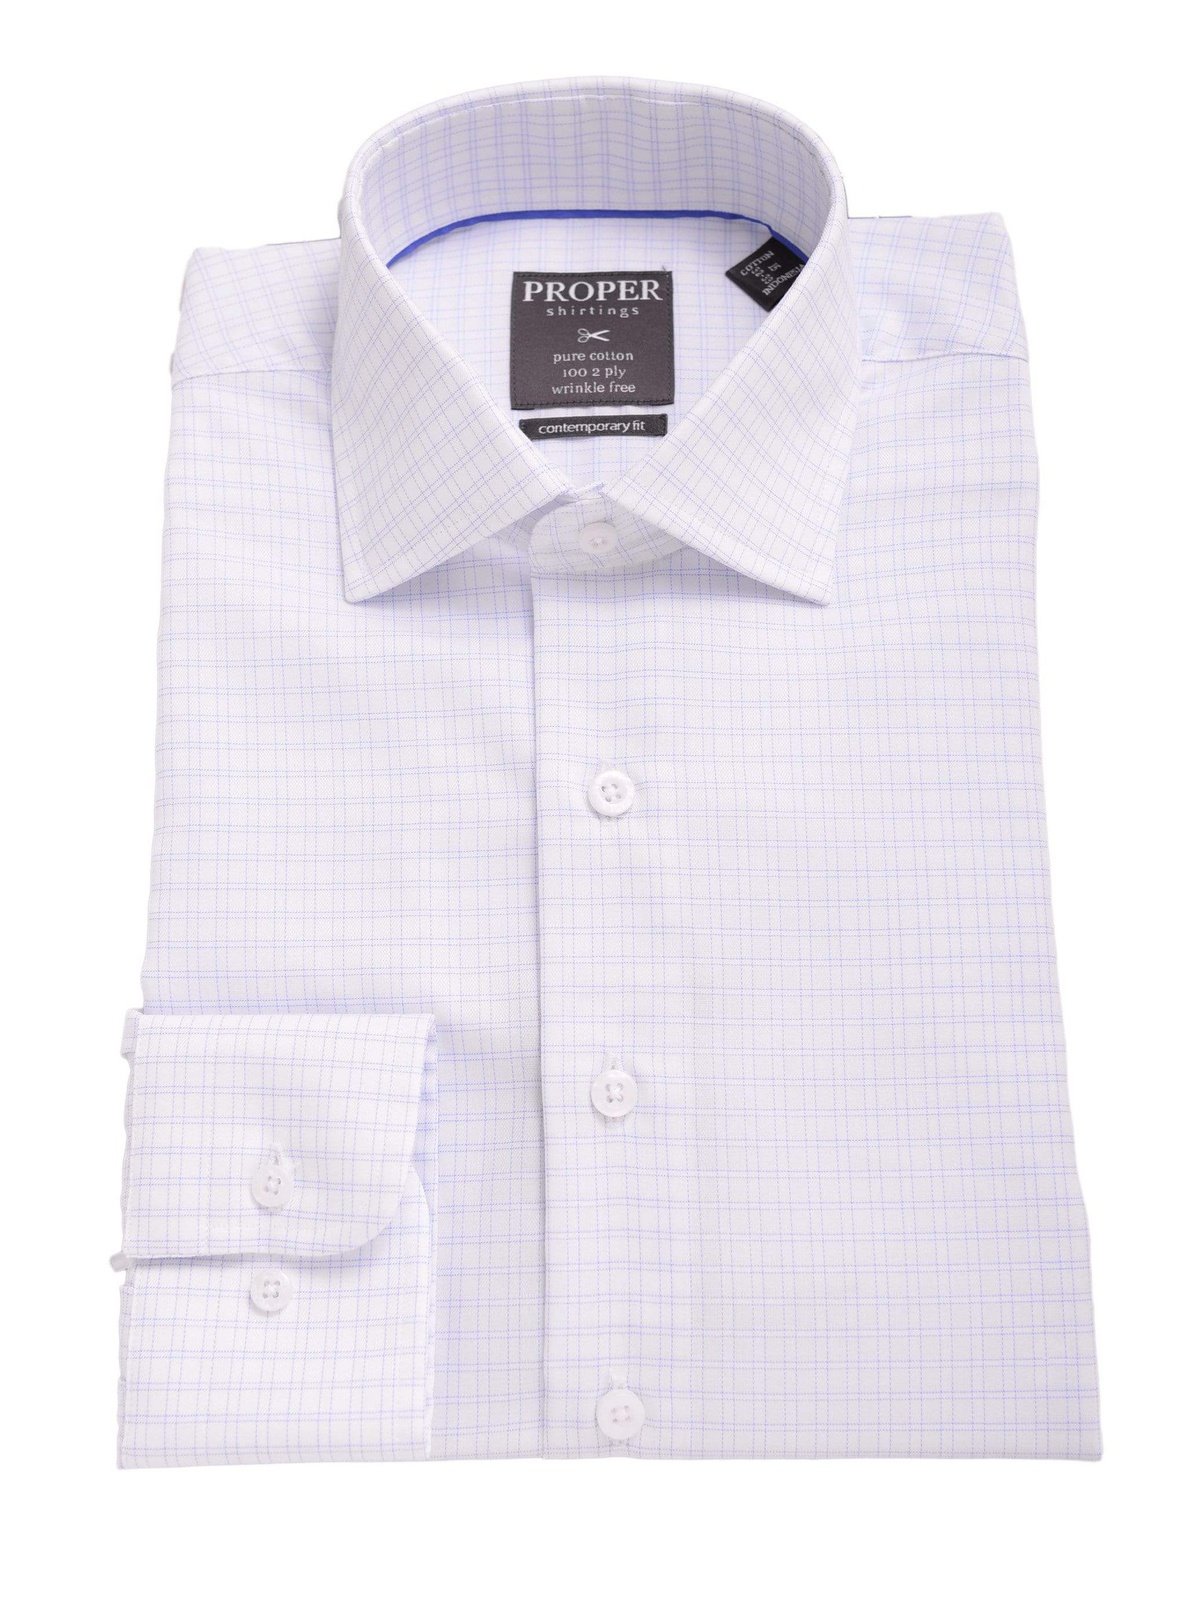 Proper Shirtings SHIRTS 14 1/2 32/33 Mens Slim Fit White &amp; Blue Plaid Spread Collar 100 2 Ply Cotton Dress Shirt